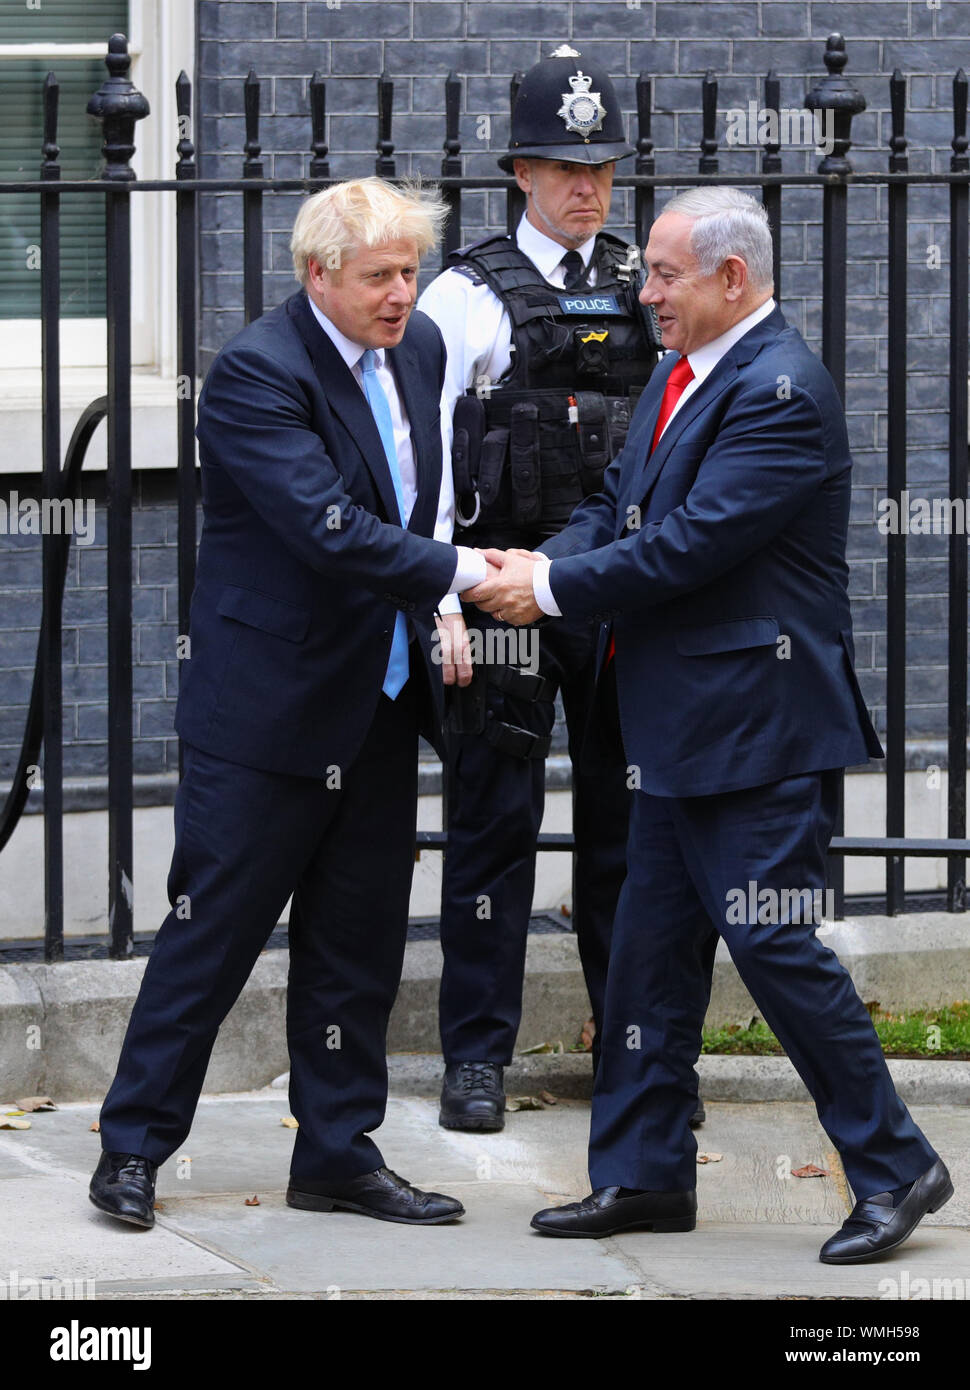 Prime Minister Boris Johnson greets the Prime Minister of Israel Benjamin Netanyahu outside 10 Downing Street, London. Stock Photo